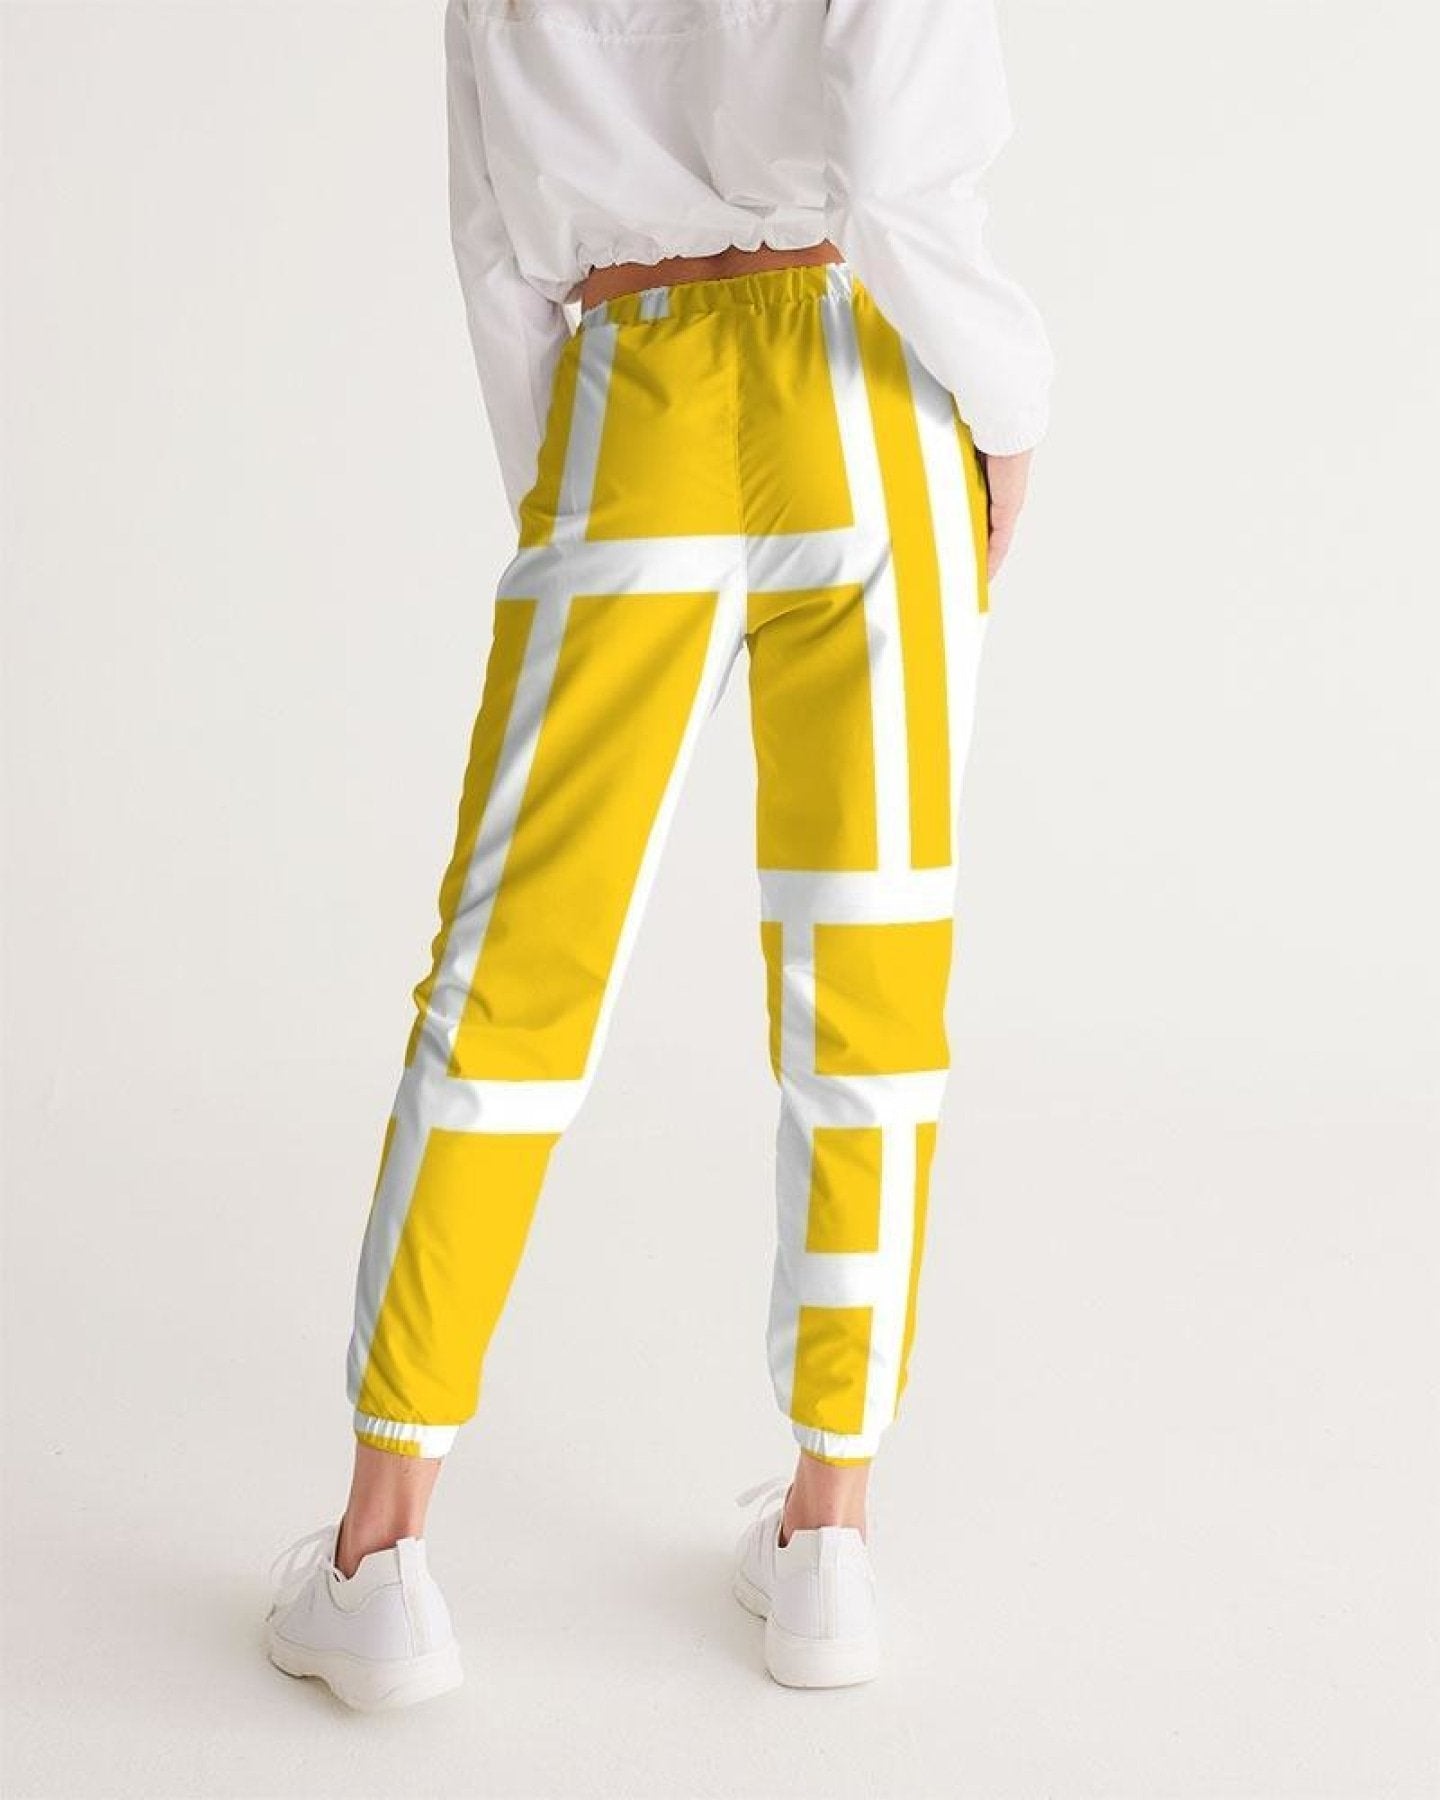 Womens Track Pants - Yellow & White Geometric Graphic Sports Pants